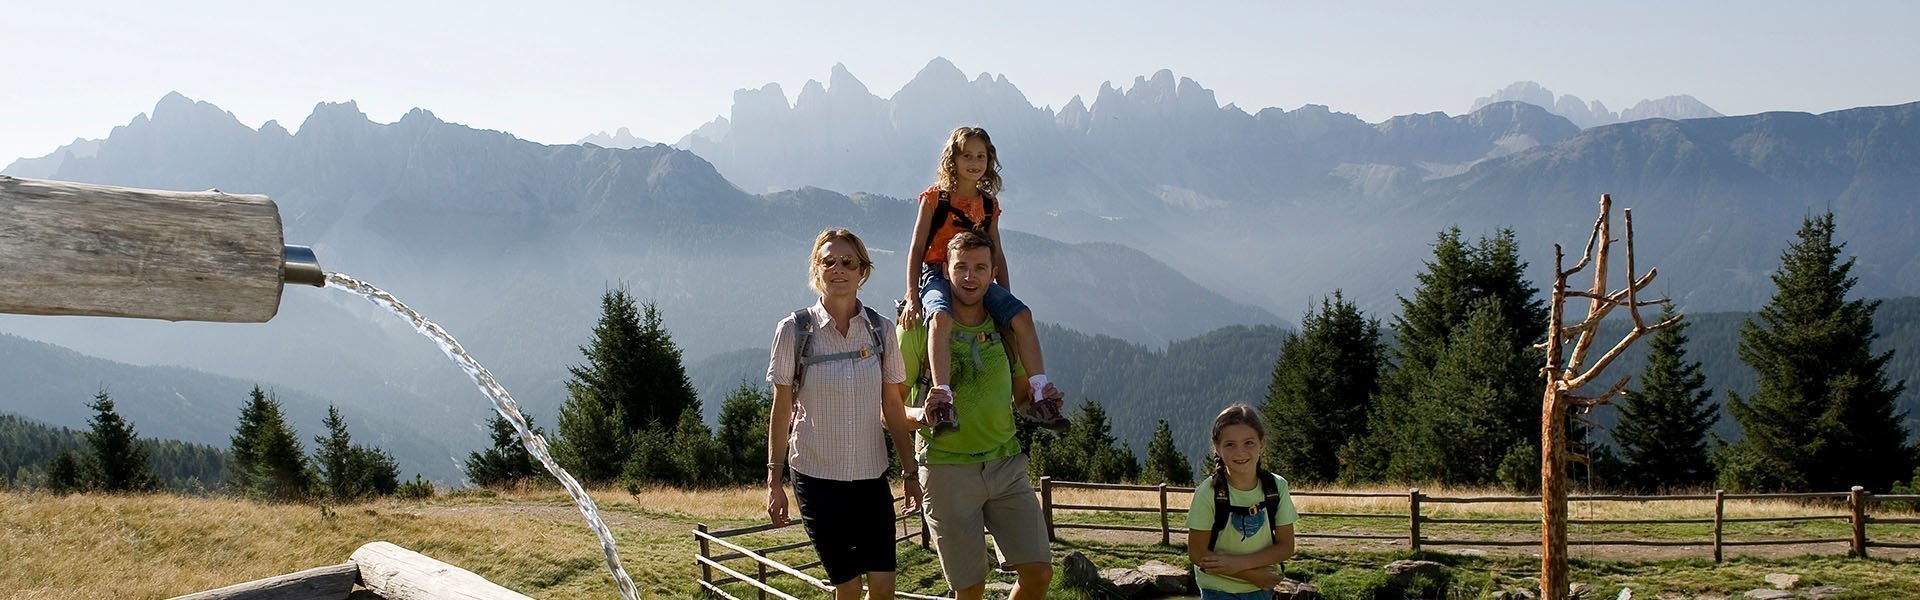 Dolomiten – Wandern im Villnösstal